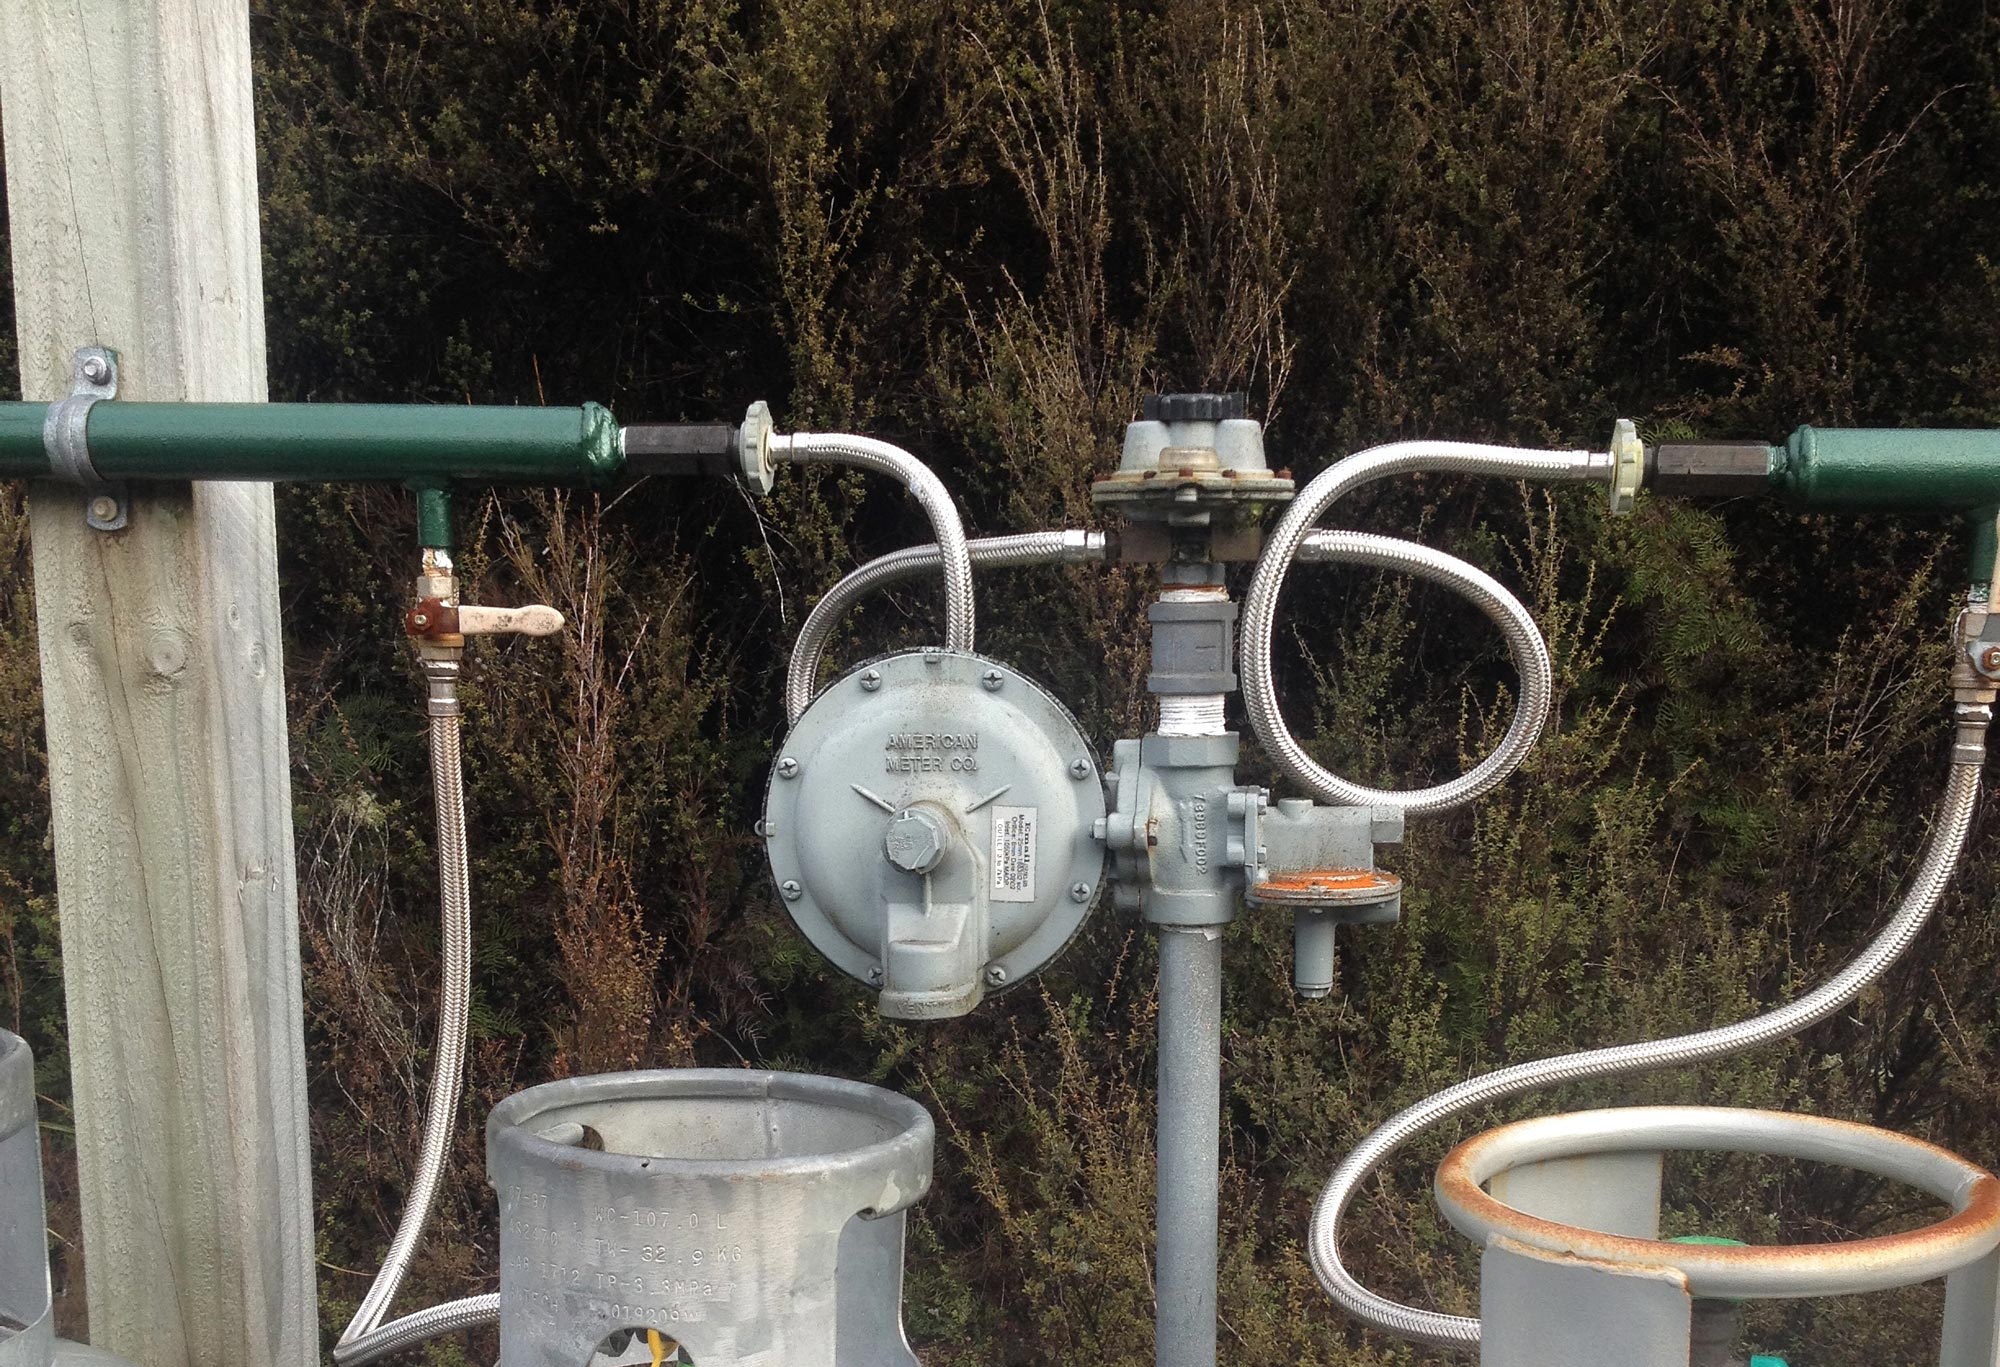 Cape Plumbing gas bottles and regulator